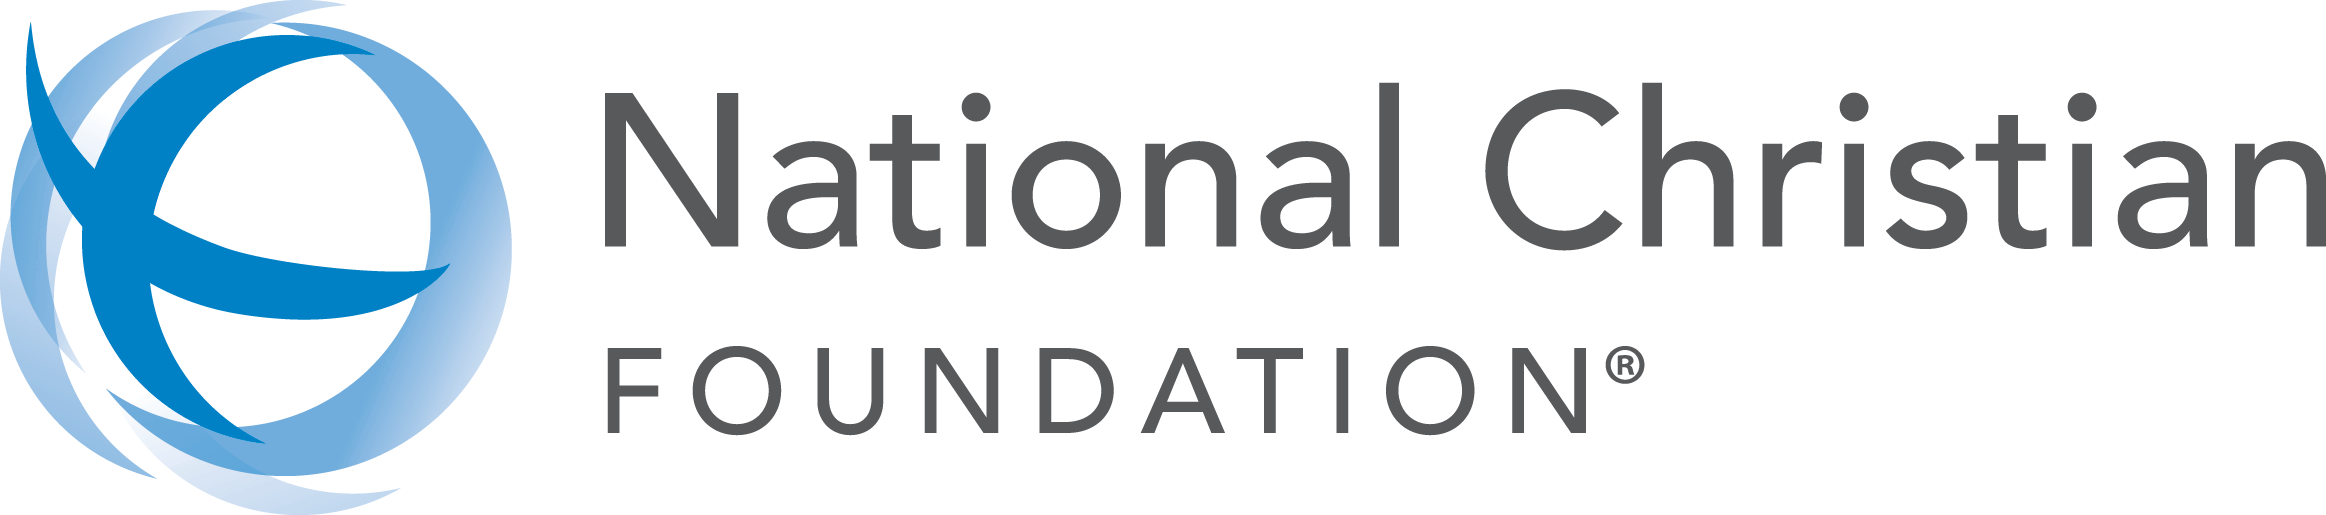 NCF logo.png